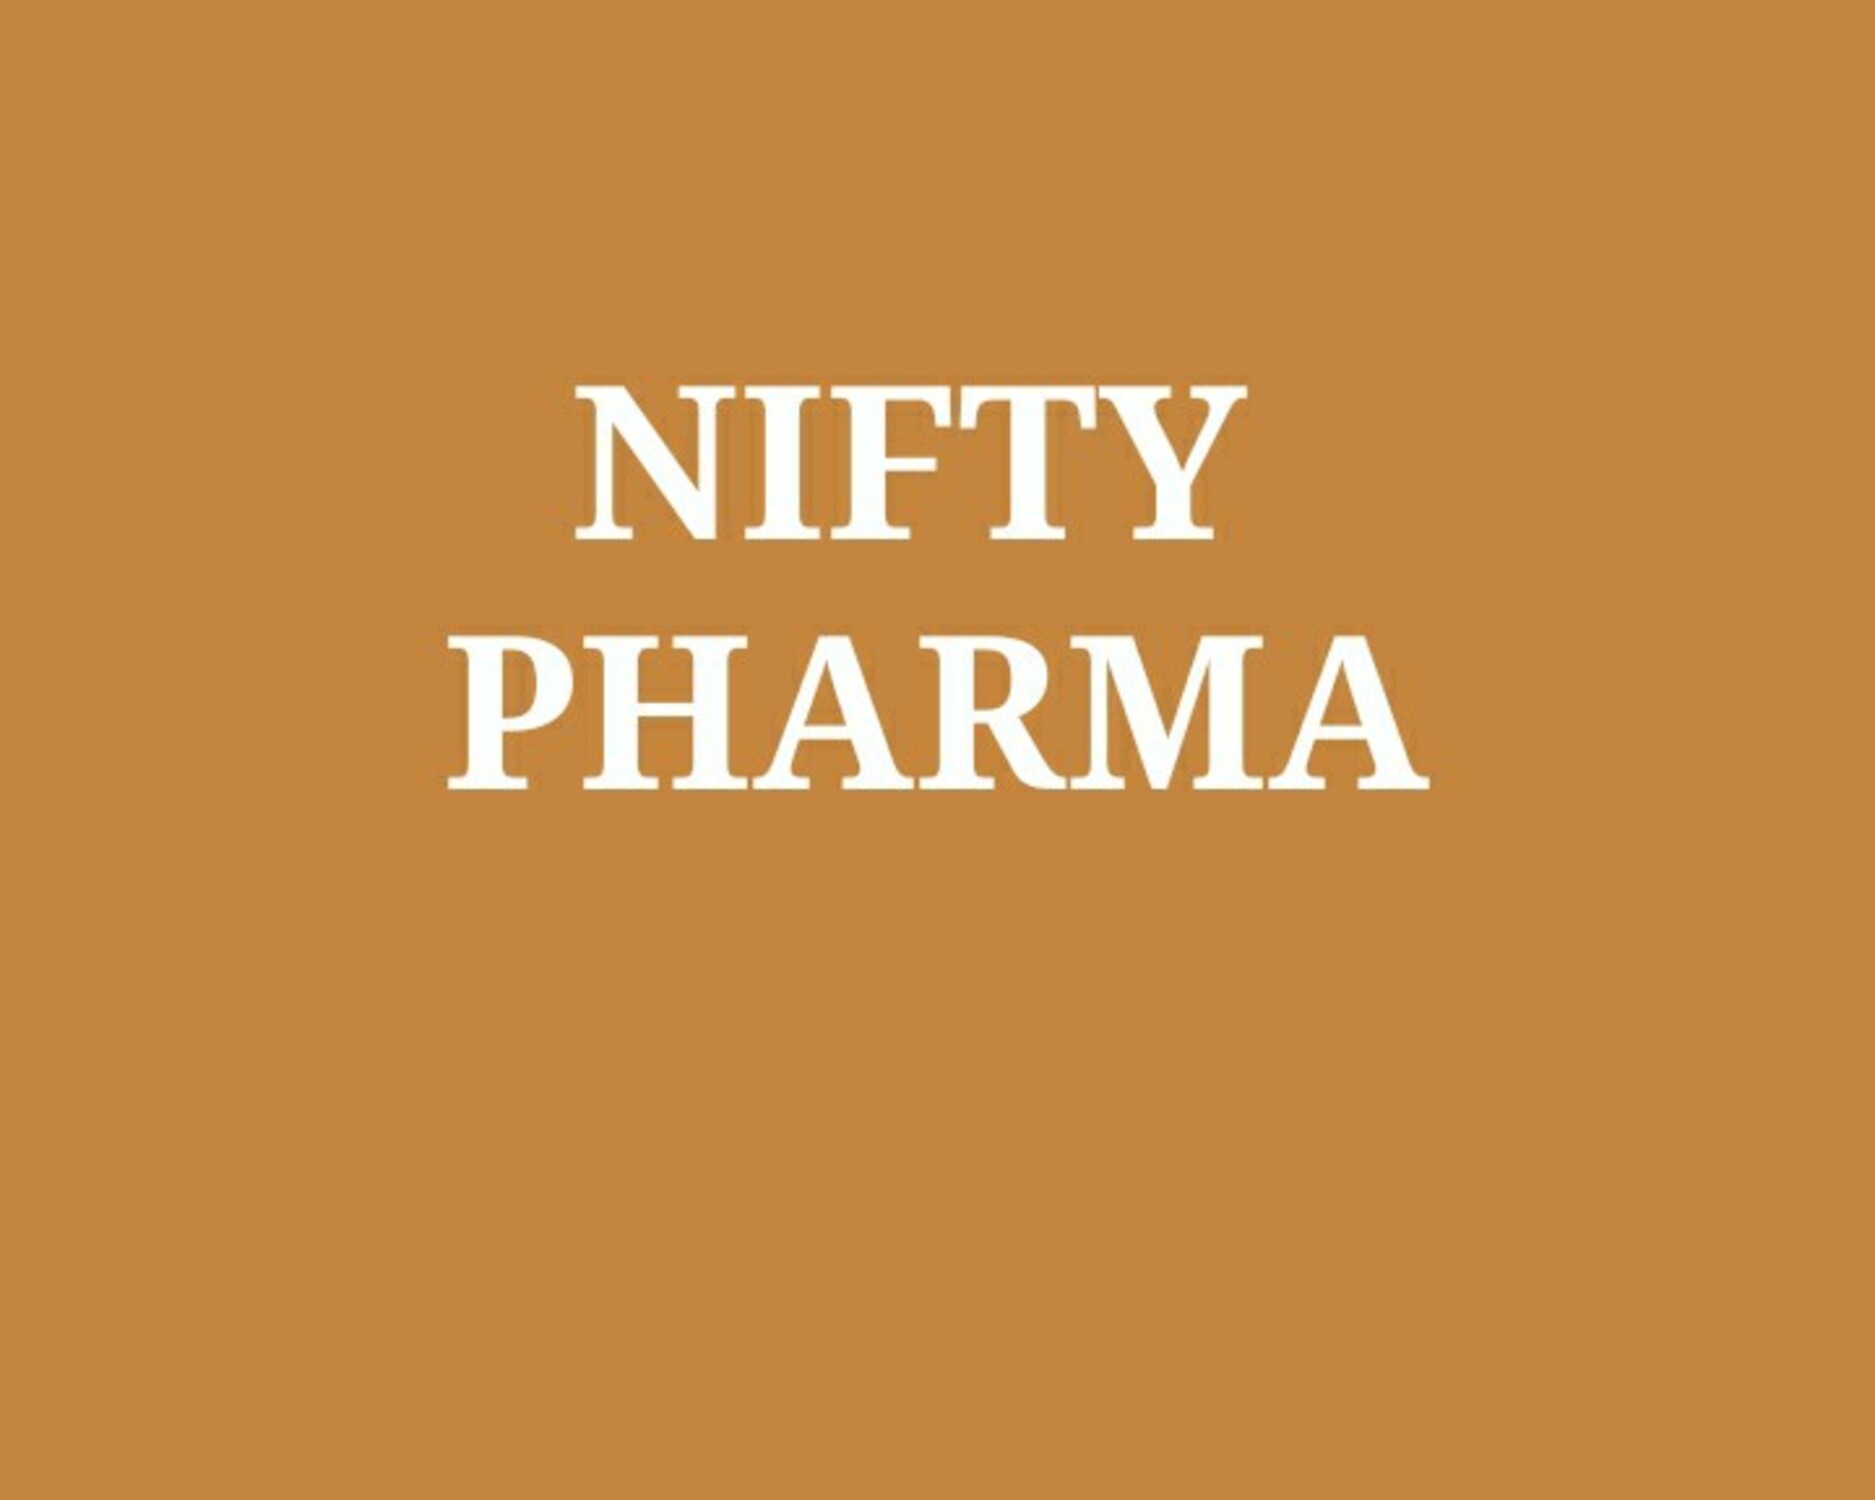 Nifty Pharma Chart